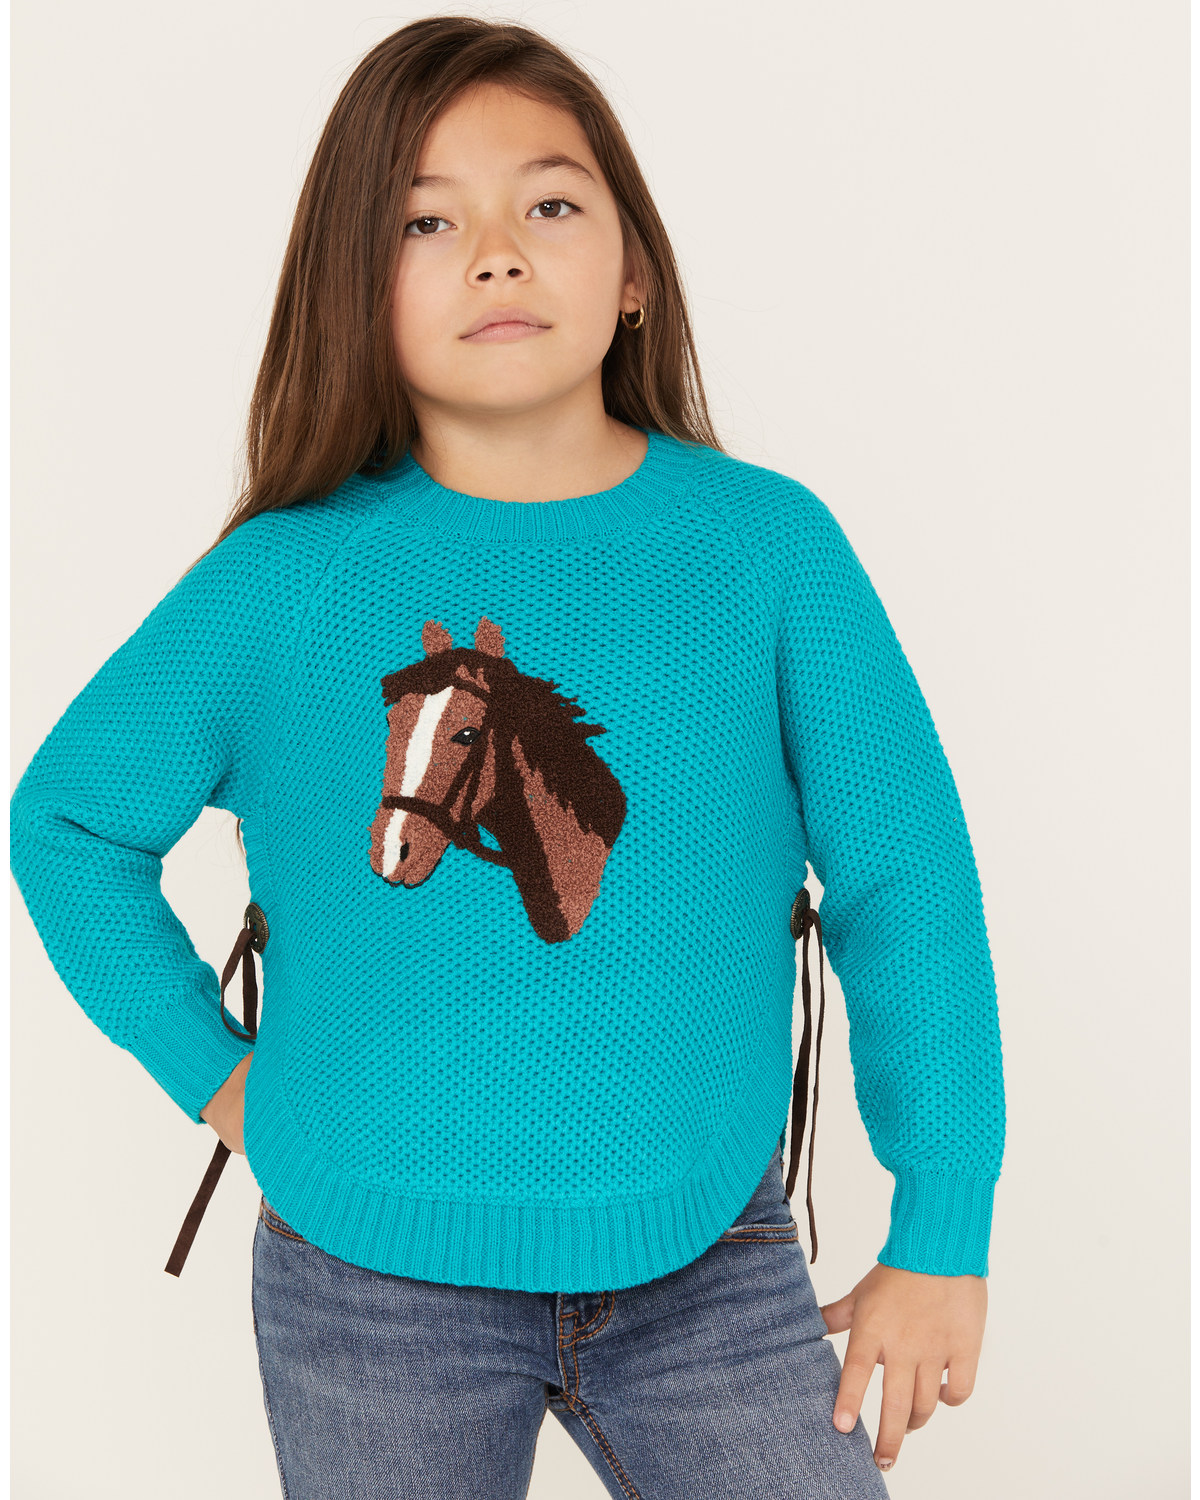 Cotton & Rye Girls' Horse Graphic Sweater